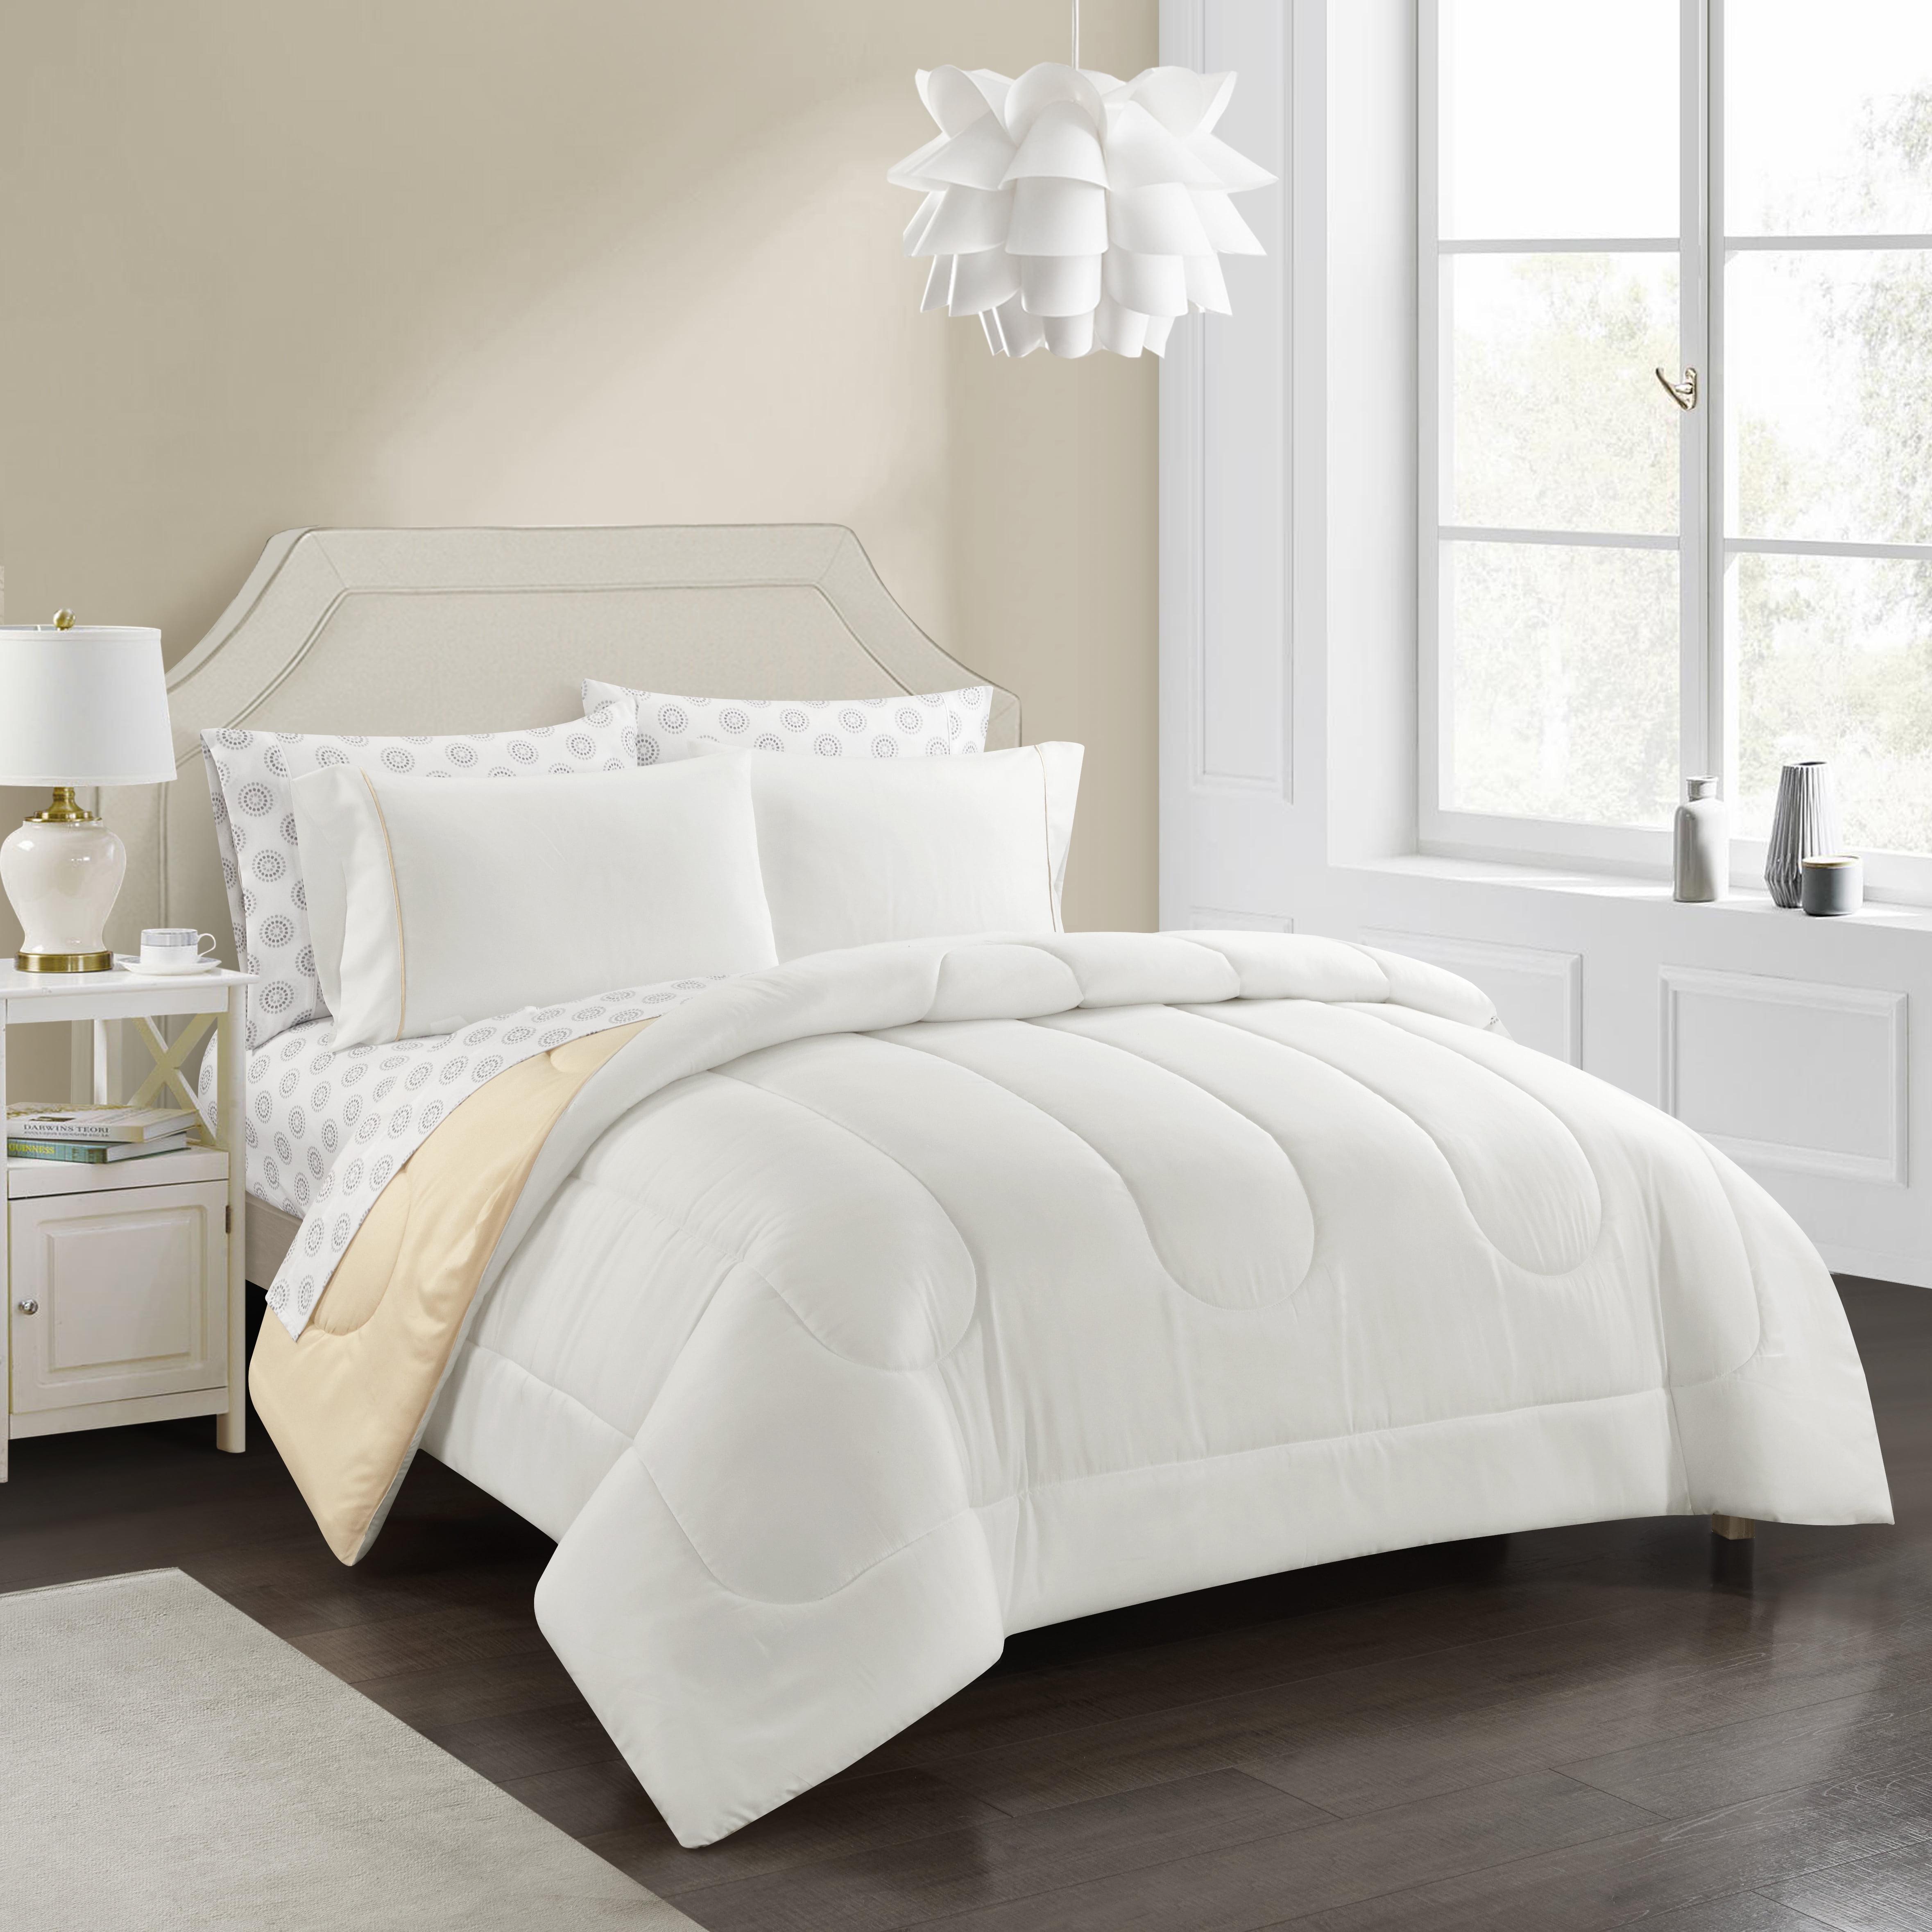 White And Gold Comforter Set Walmart : King Comforter Oversized Elegant ...